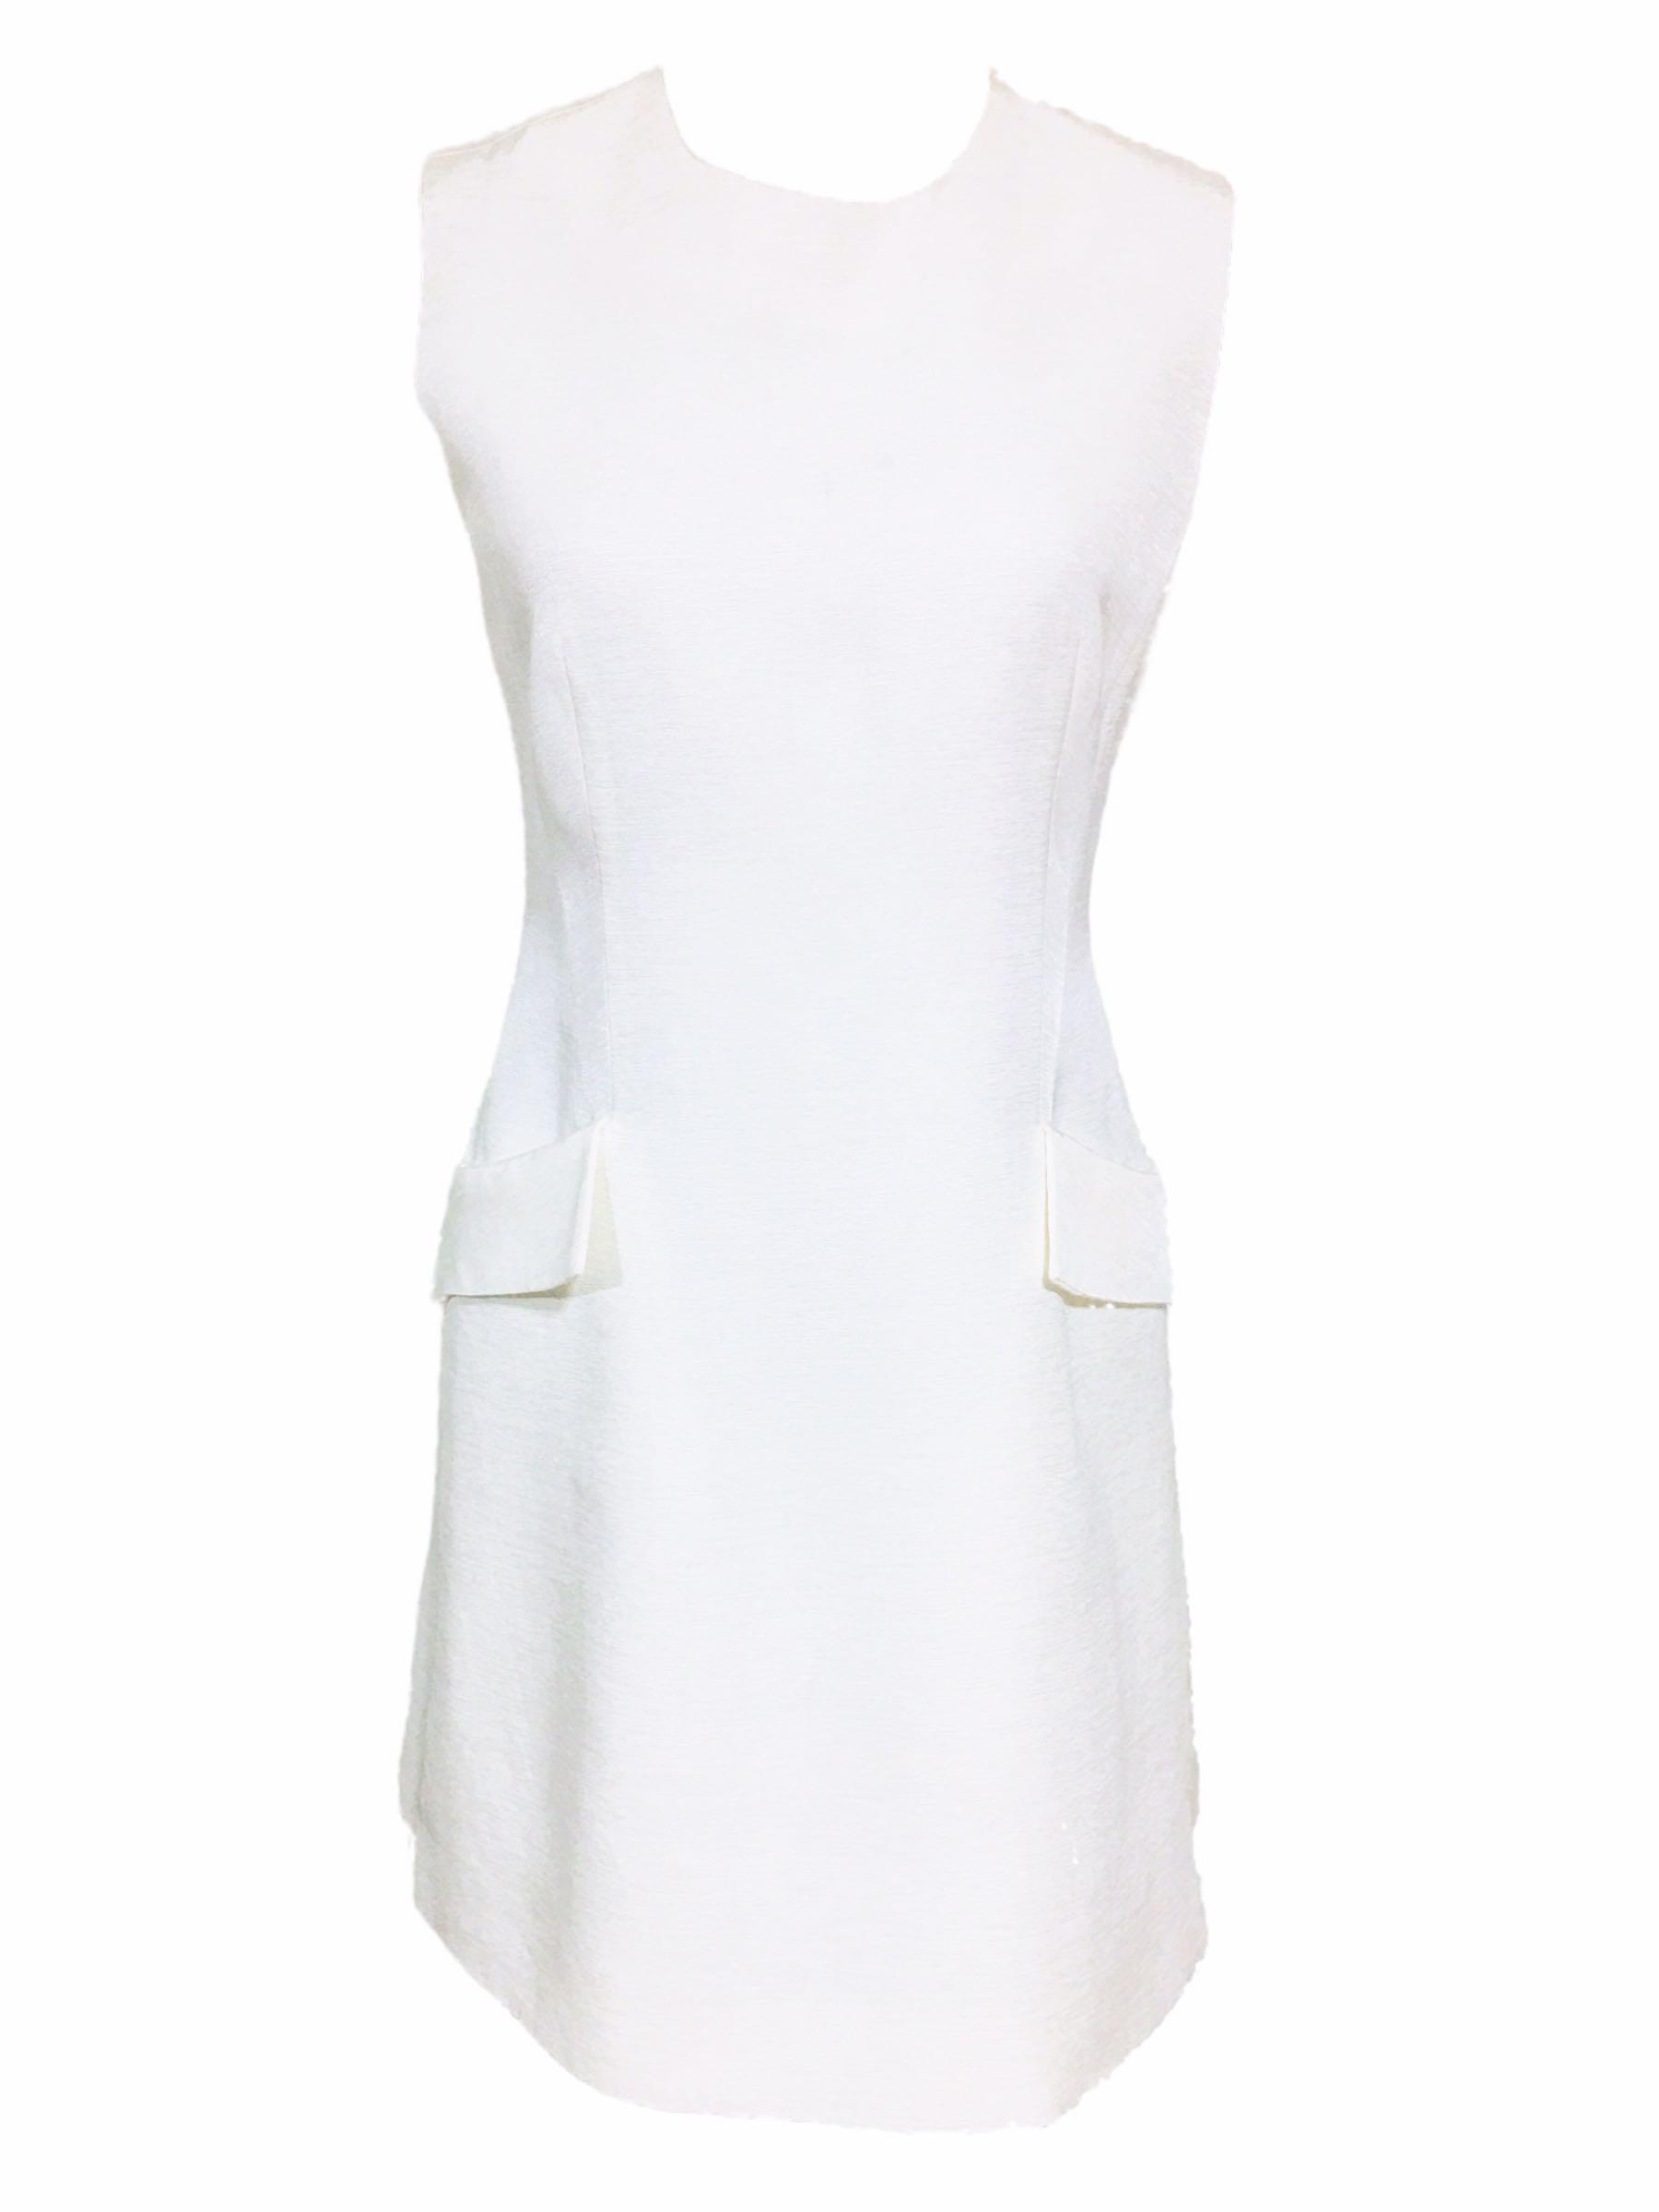 Shop Christian Dior White dress on SALE  MonaLisaLikes